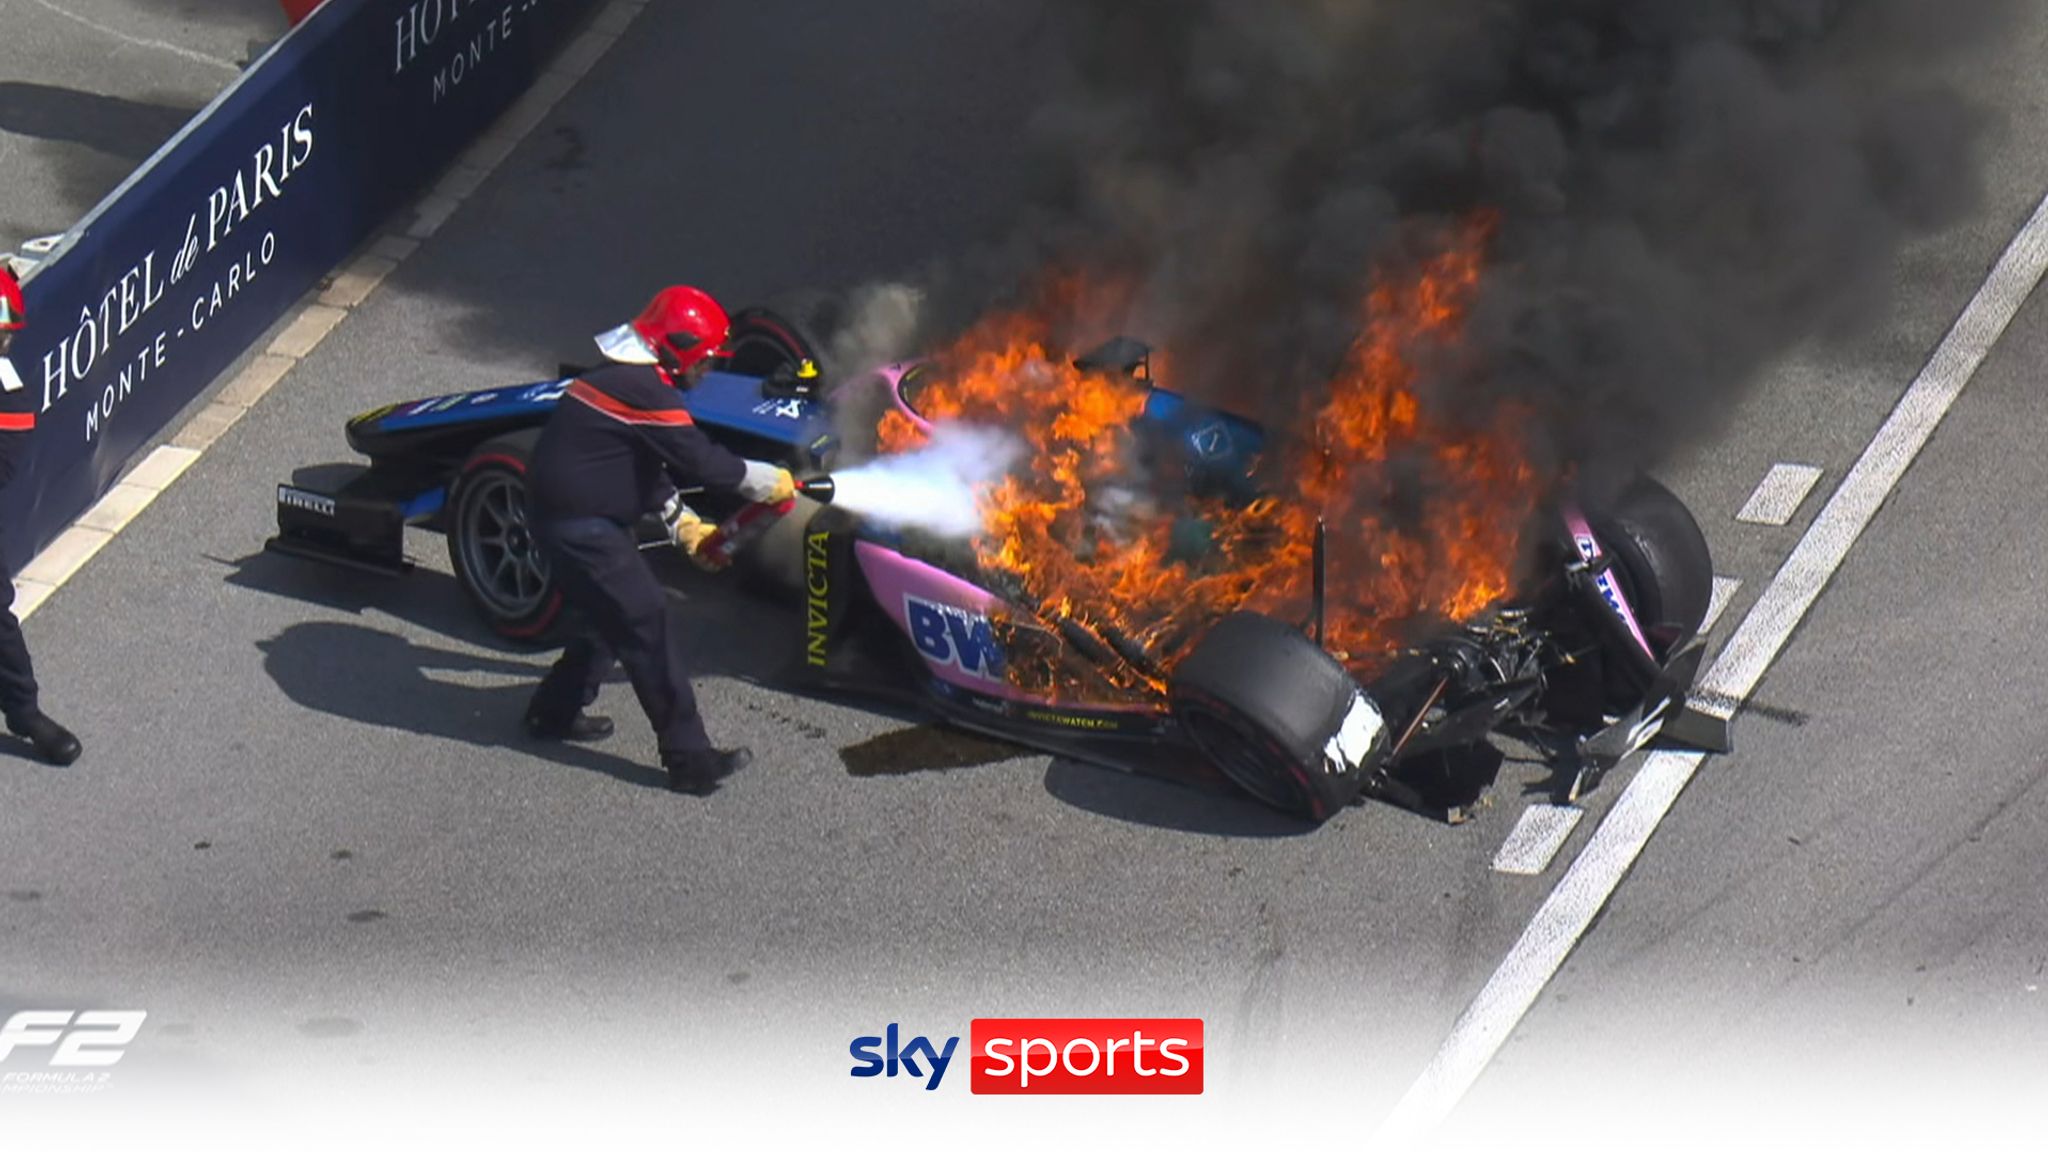 F2 Monaco Jack Doohans car catches fire Zane Maloney nearly hits wreckage! Video Watch TV Show Sky Sports